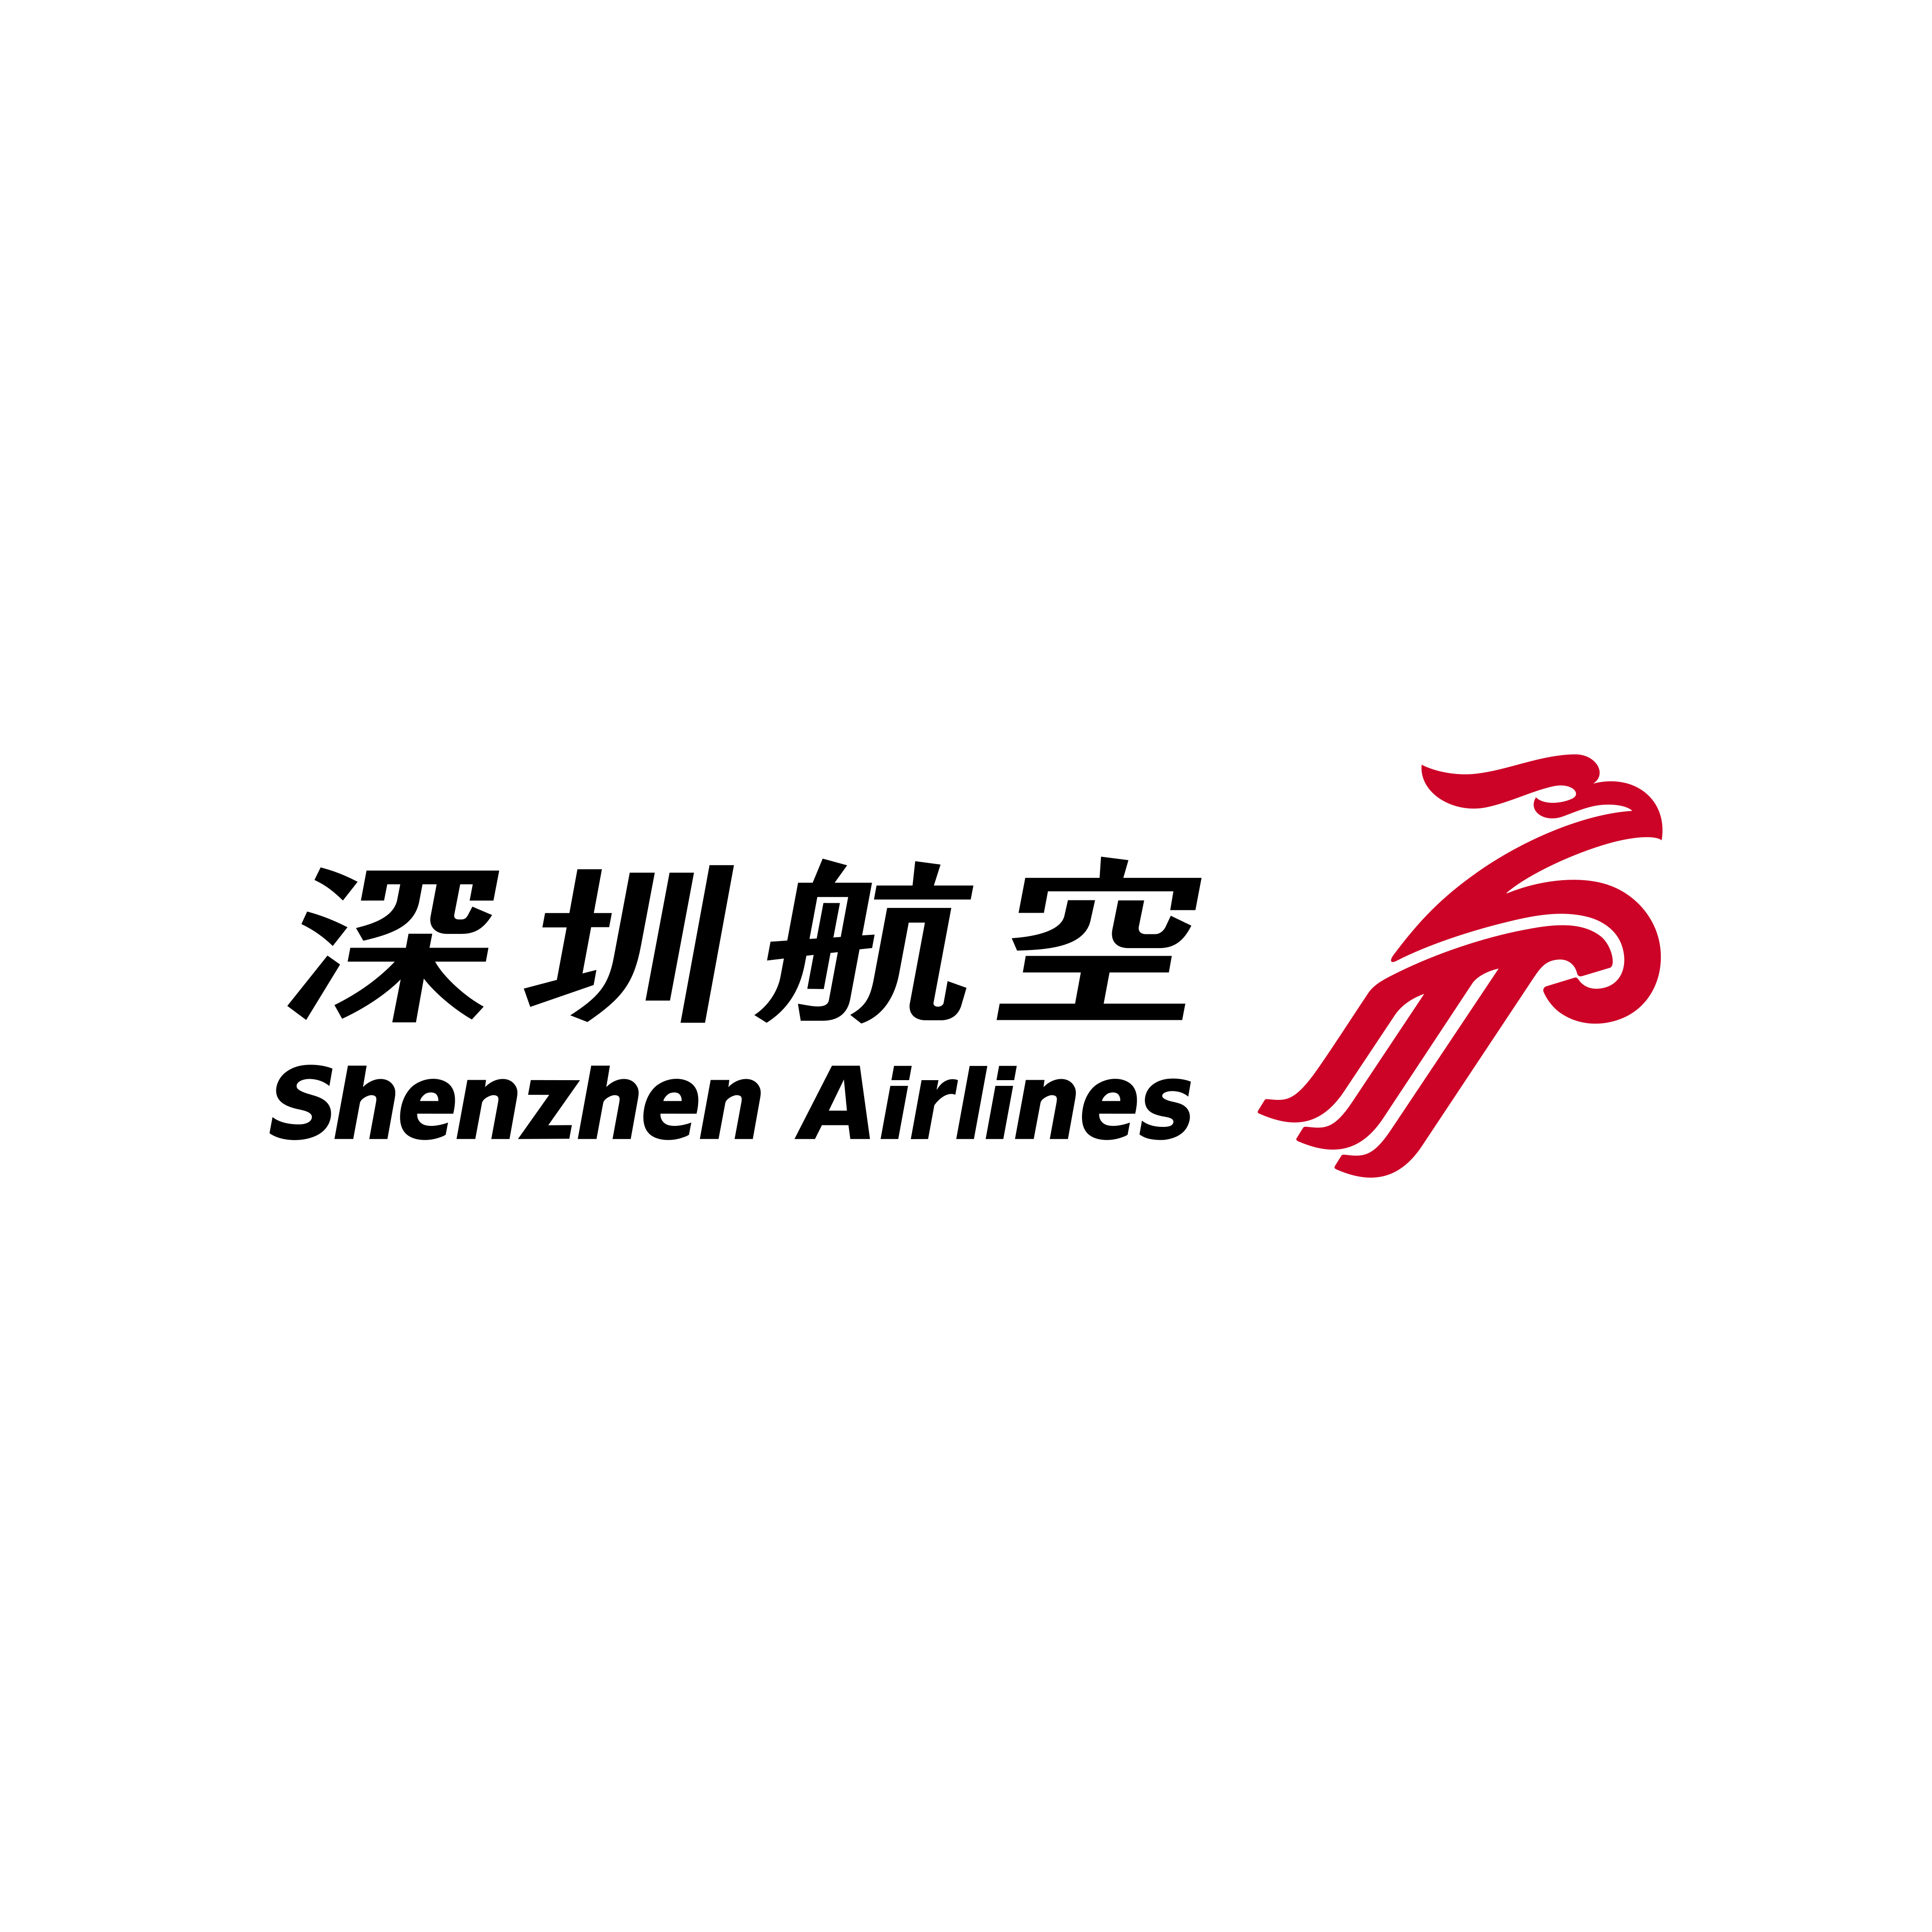 Shenzhen Airlines Logo PNG.